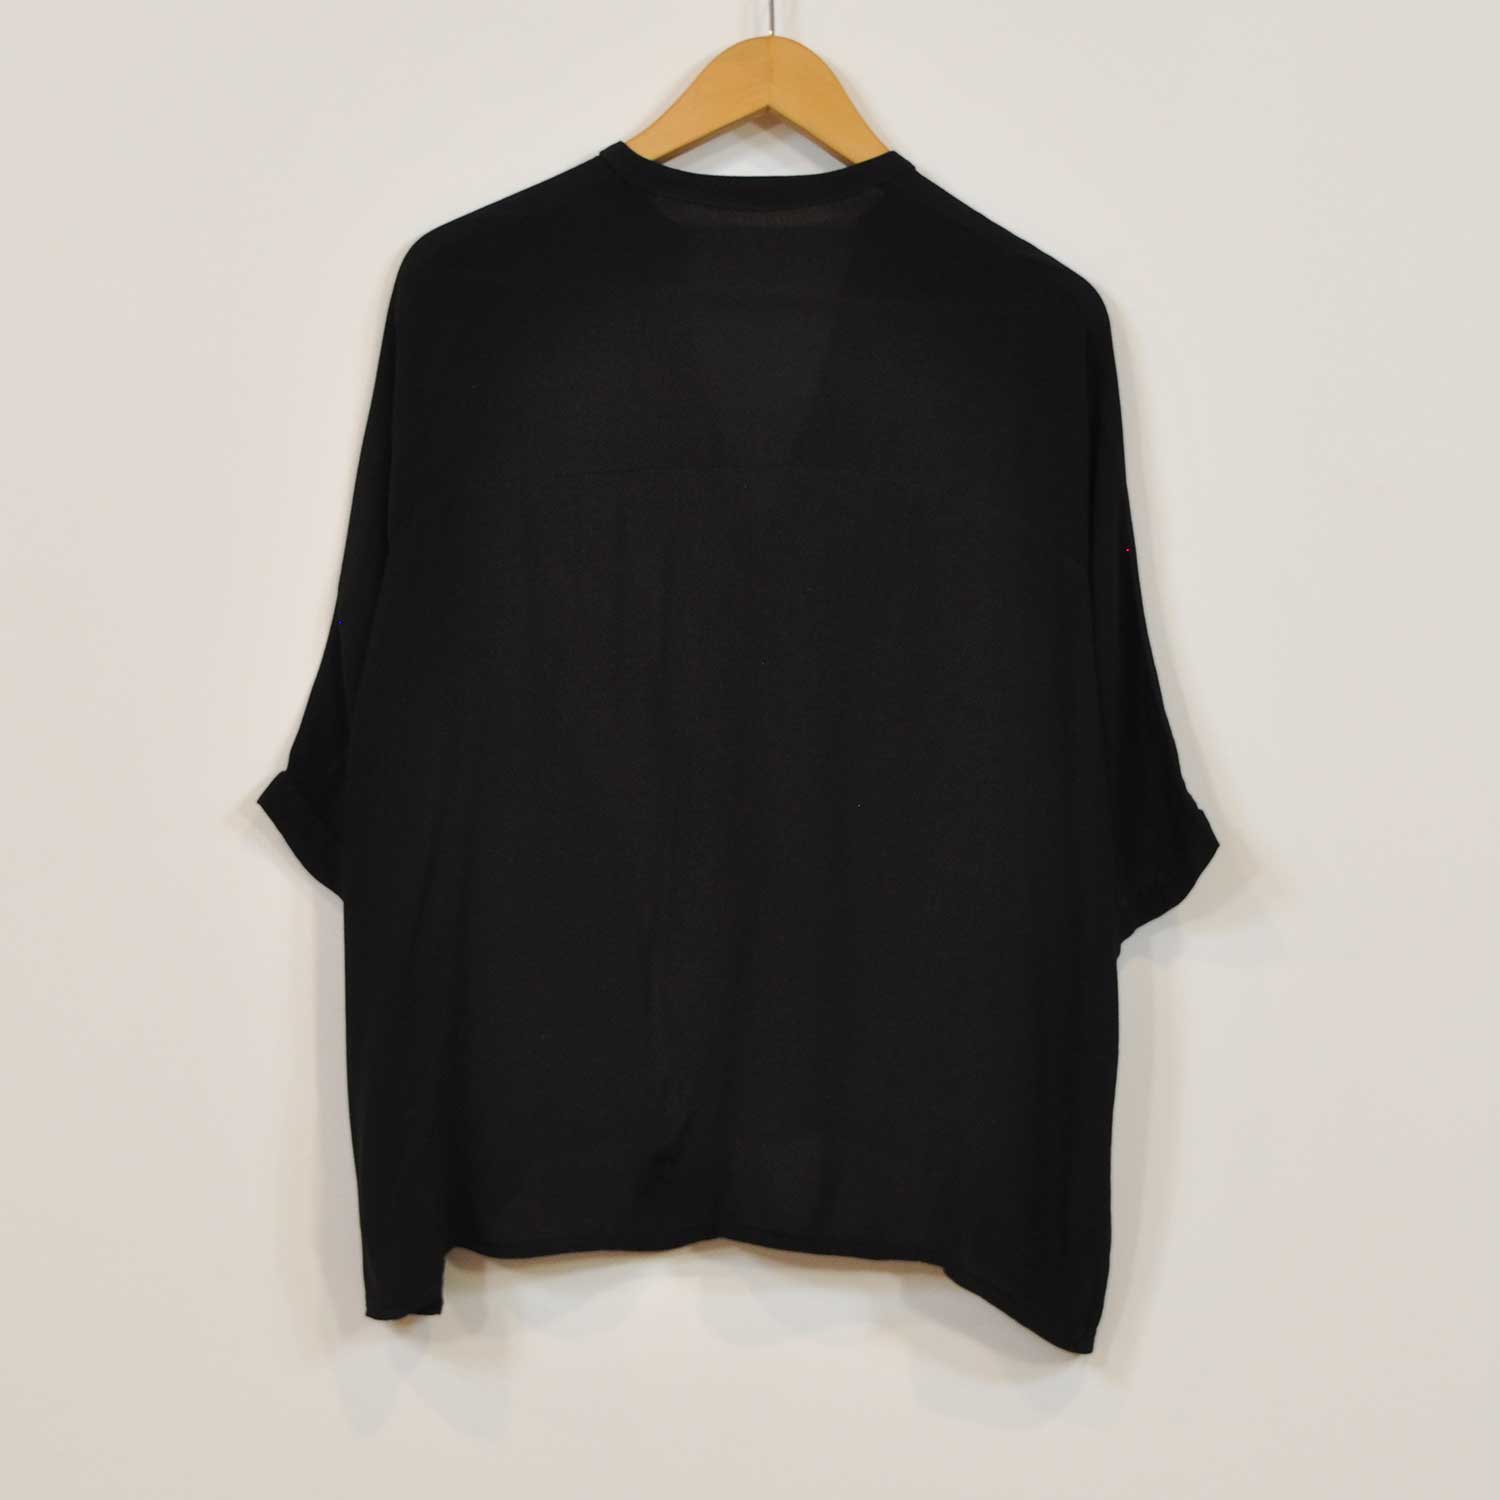 Black oversize shirt